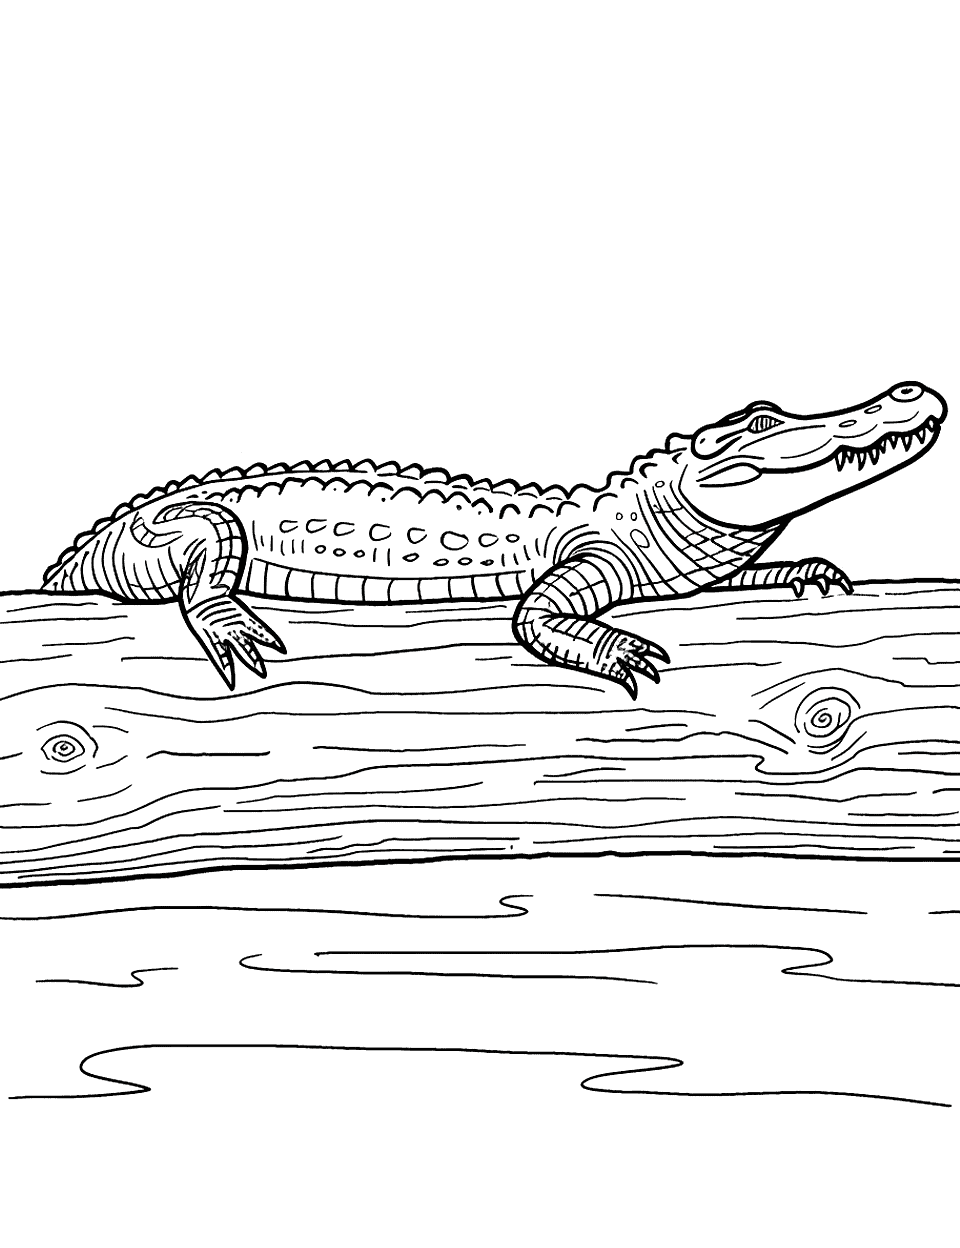 Crocodile on a Log Coloring Page - A lazy crocodile sunbathing on a floating log in a calm lake.